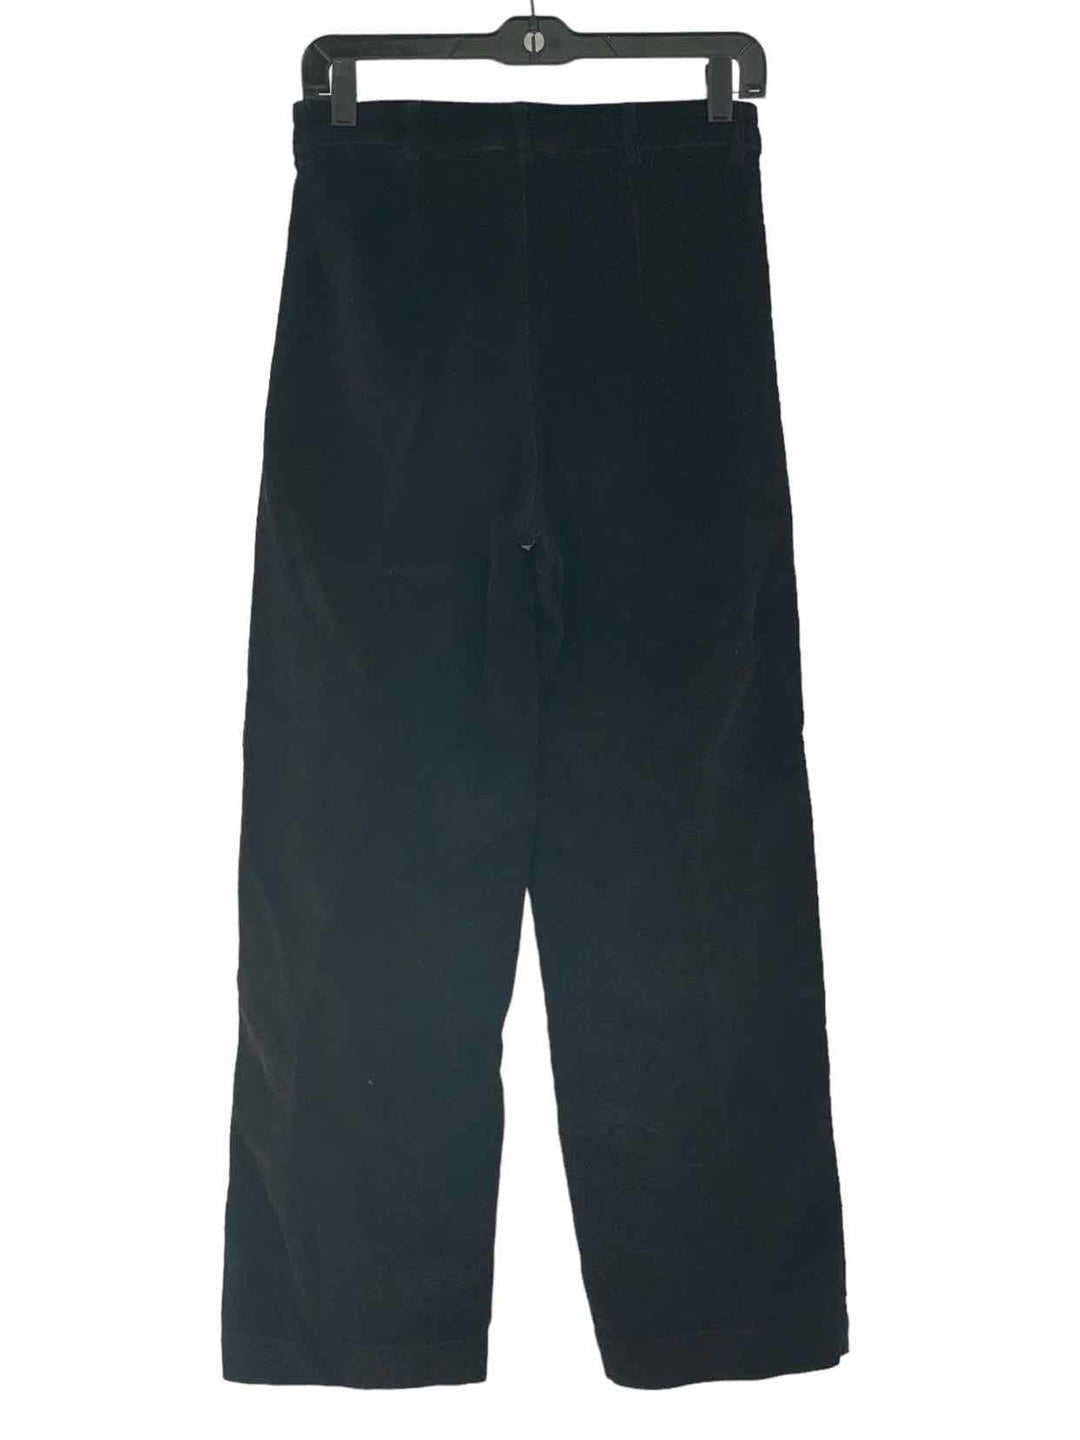 Everlane Size 2 Black Corduroy Pants